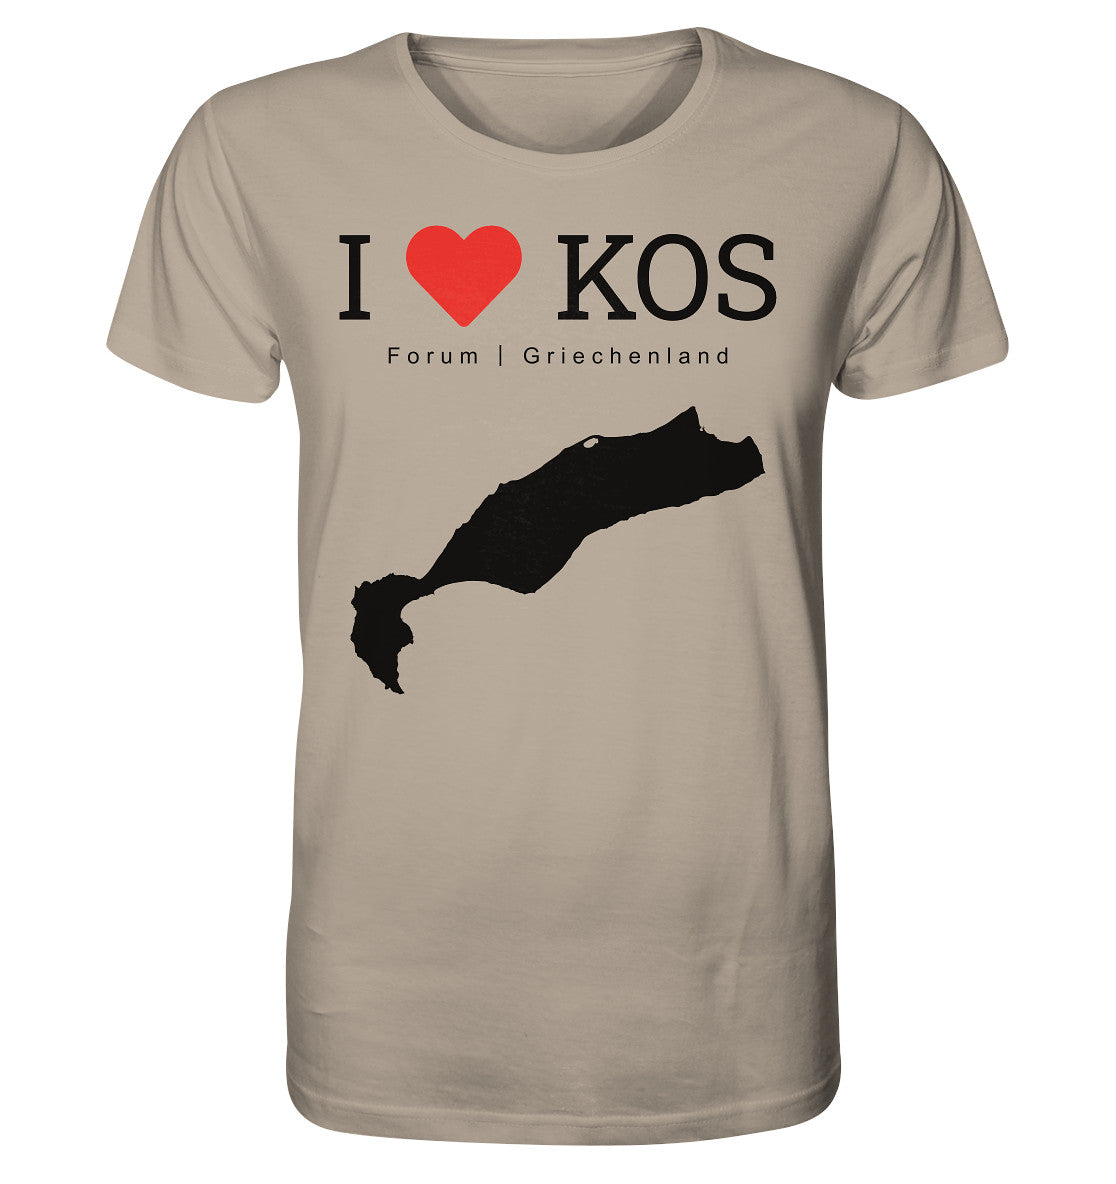 I LOVE KOS - Forum Greece Black - Organic Shirt